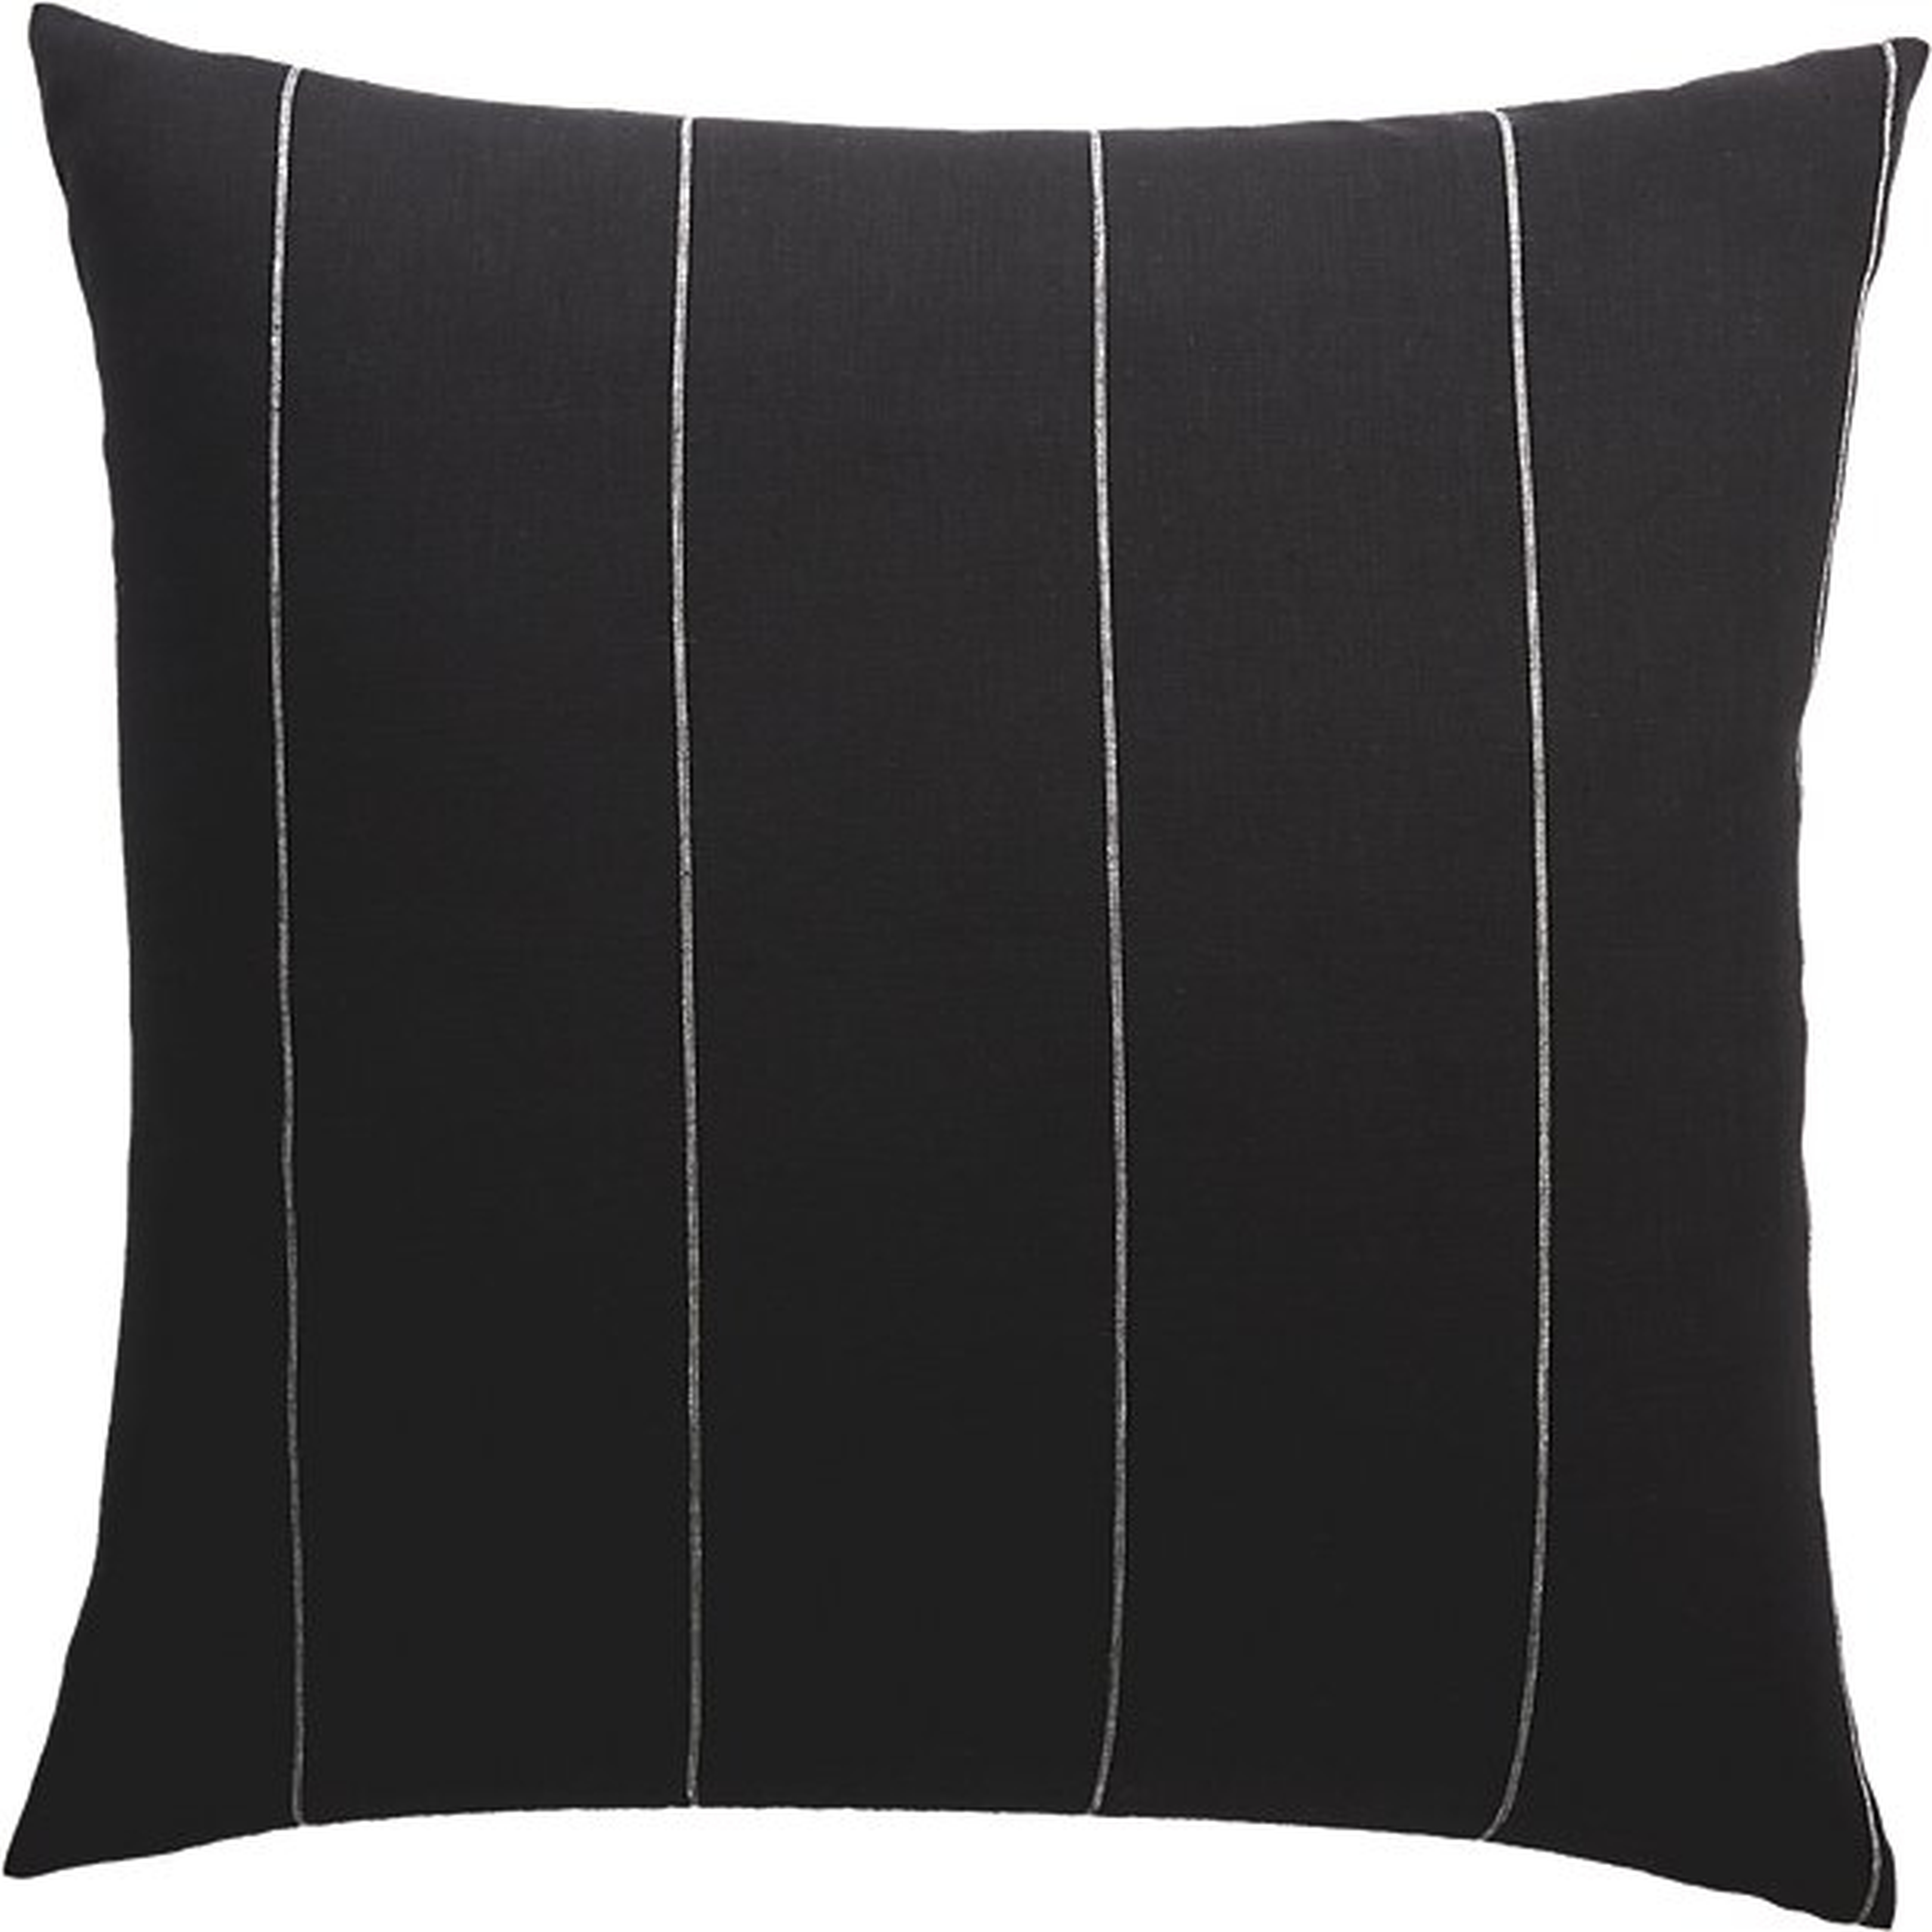 Pinstripe Linen Pillow with Down-Alternative Insert, Black, 20" x 20" - CB2